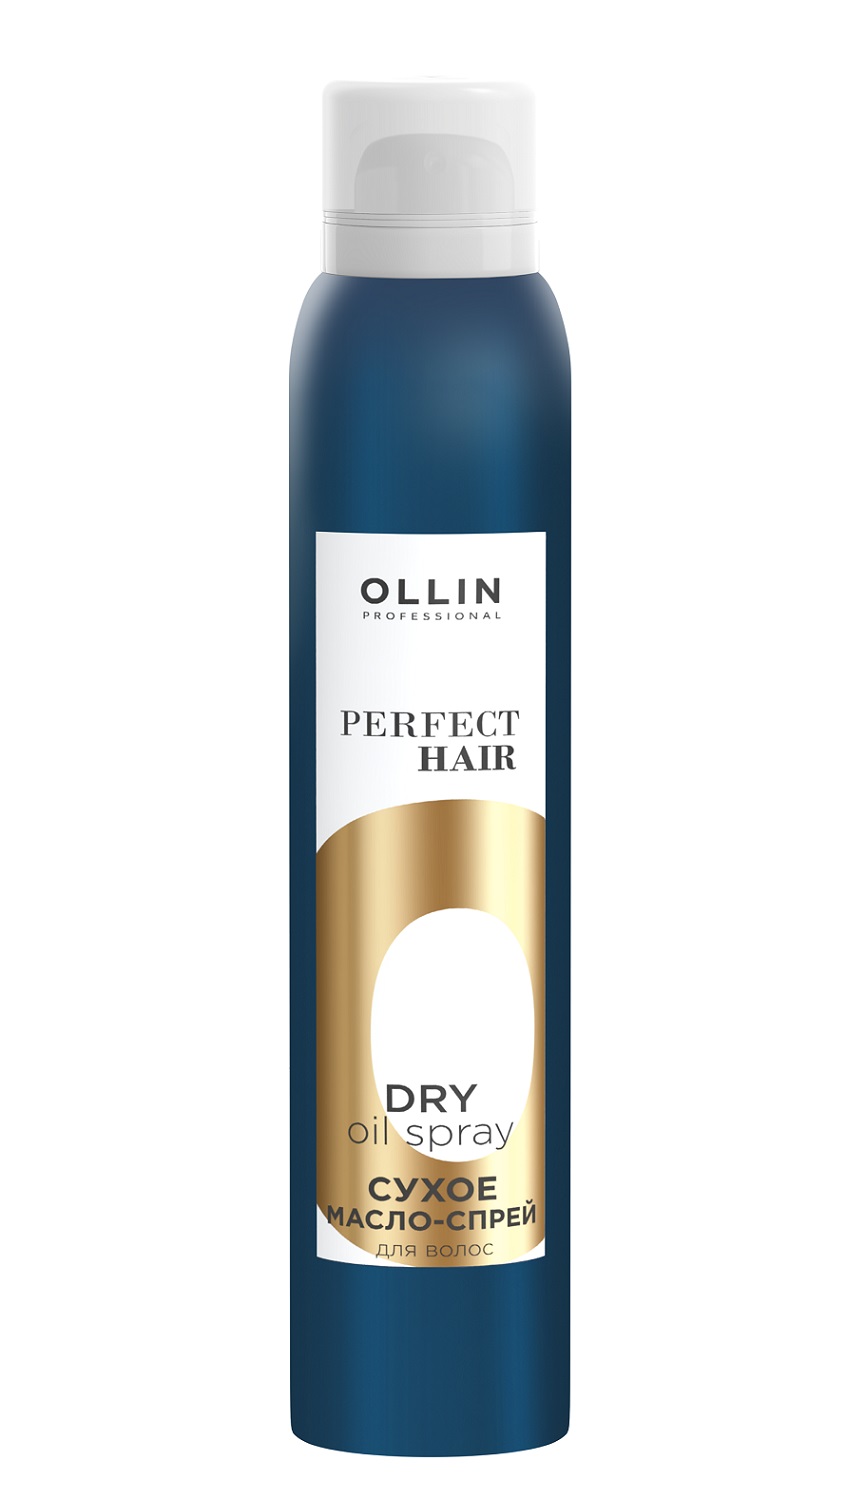 Ollin Professional Сухое масло-спрей для волос, 200 мл (Olli